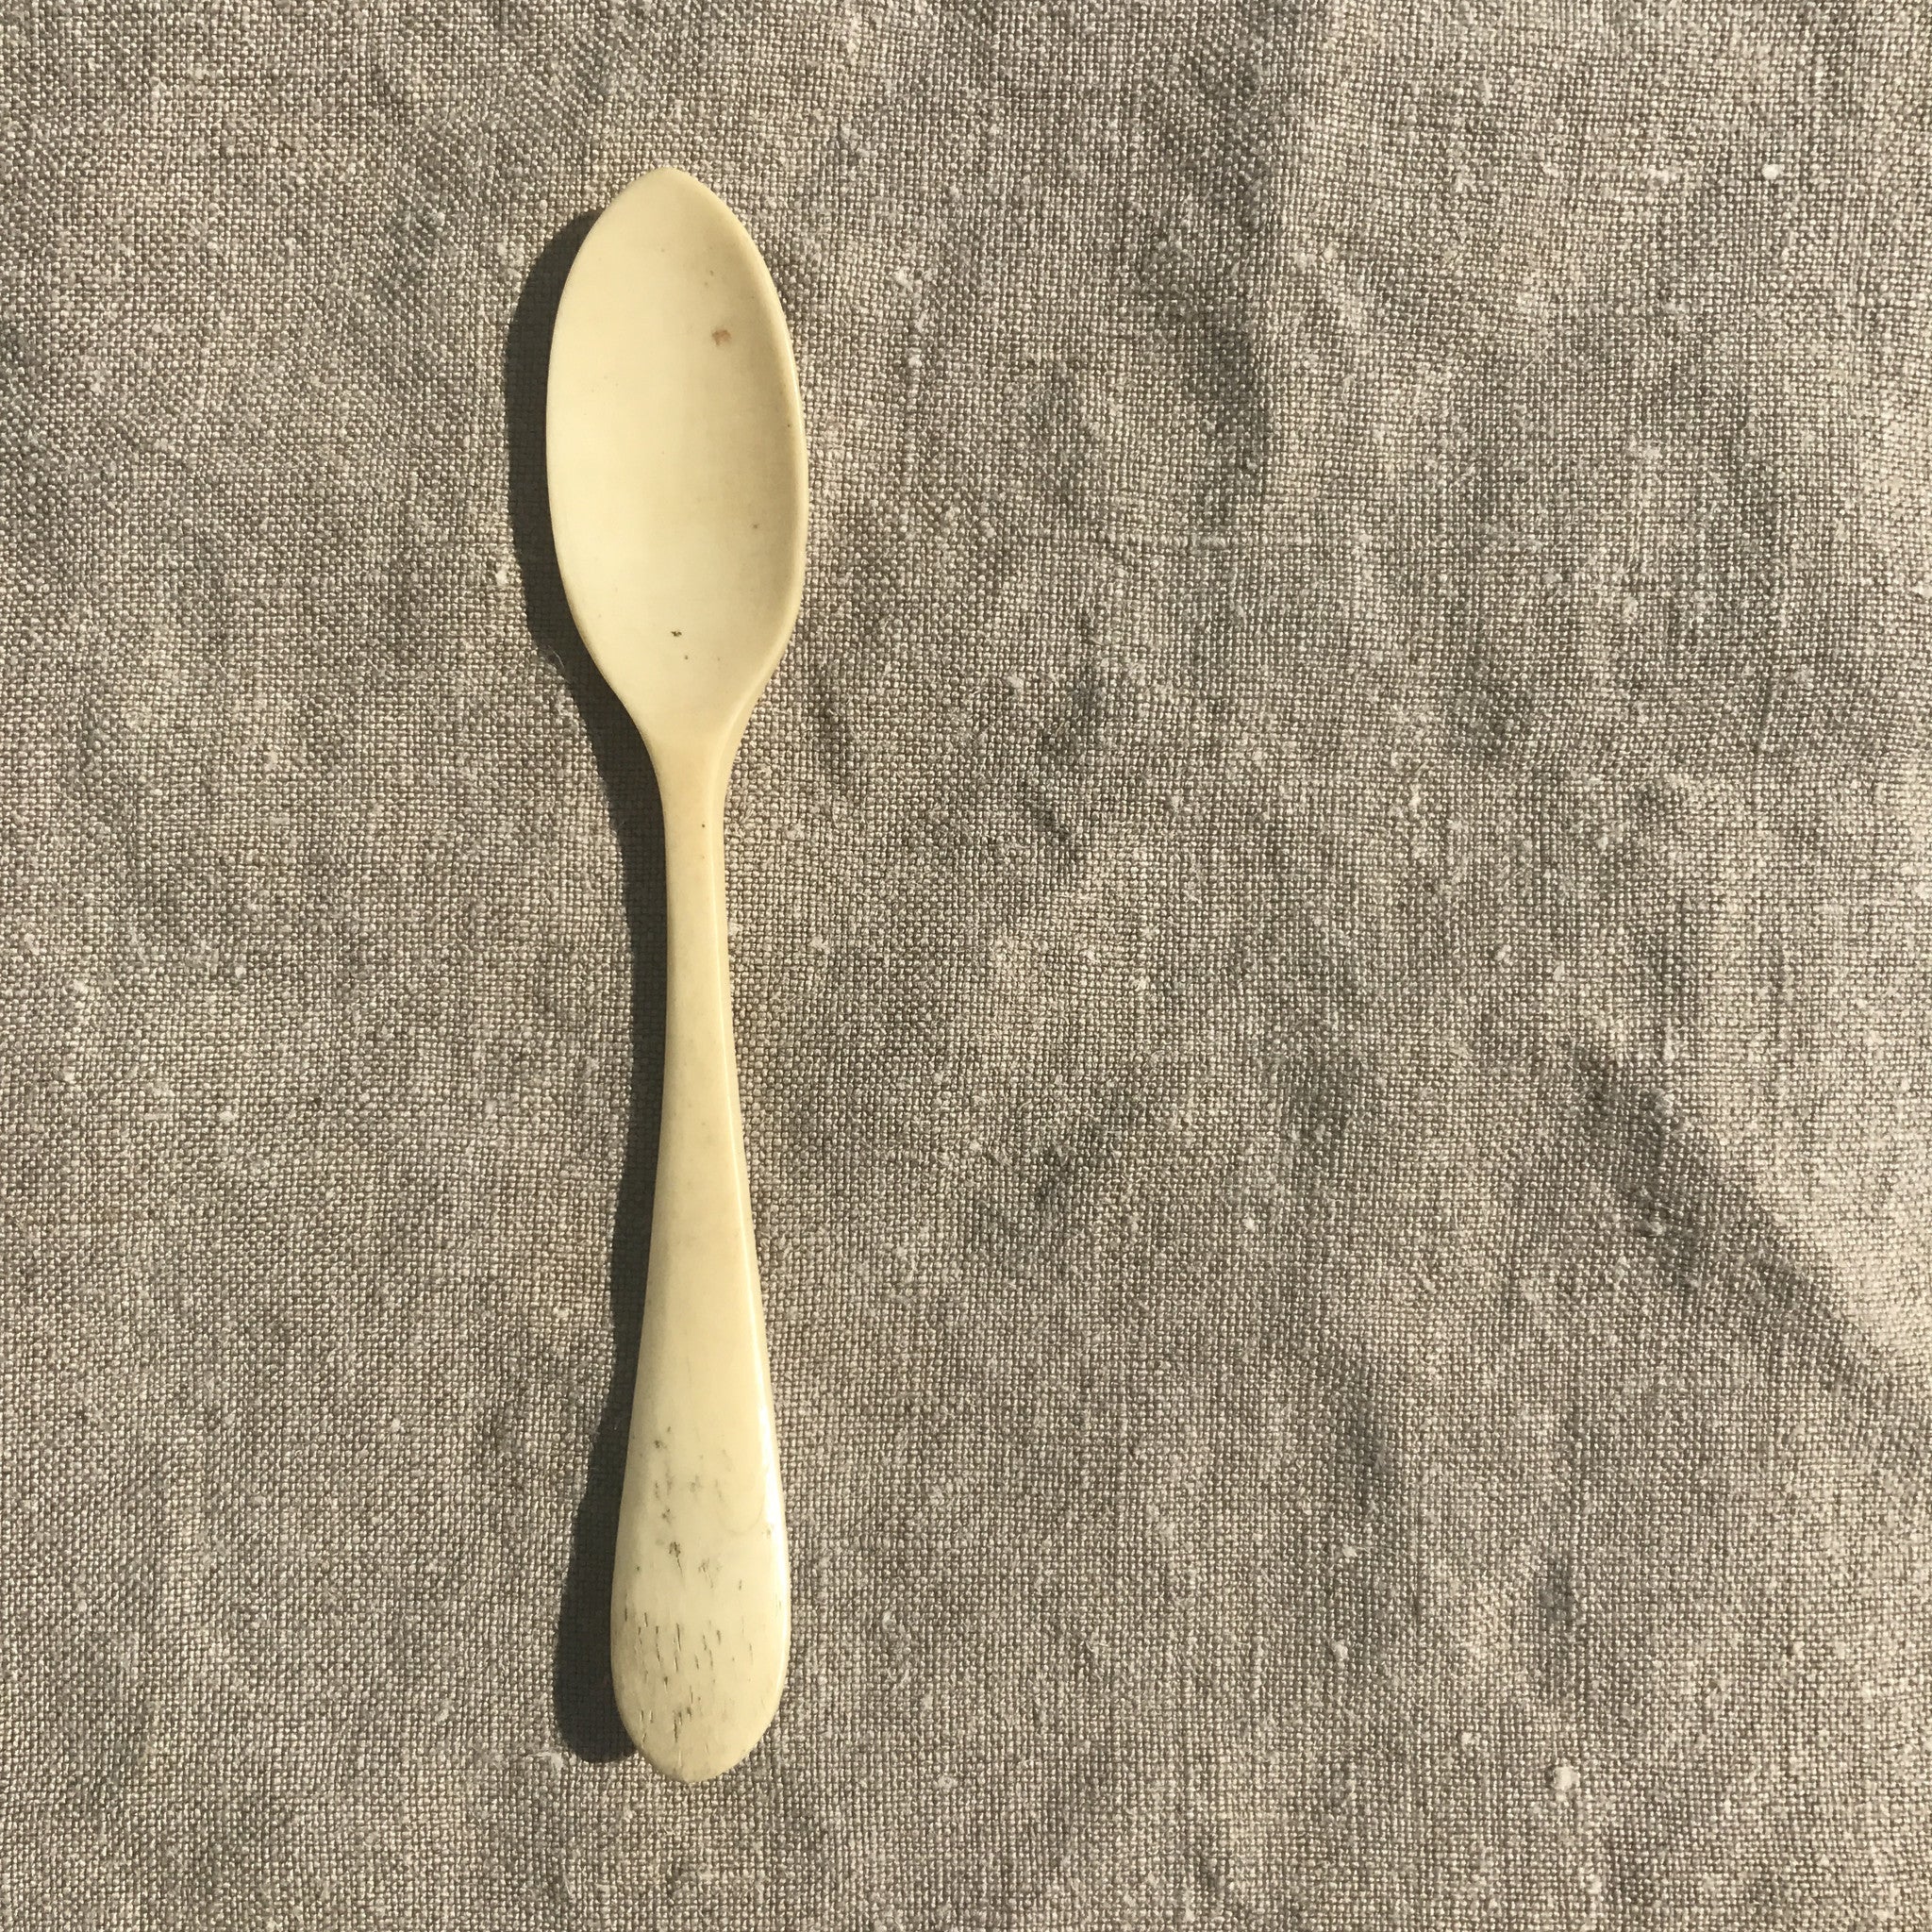 seaman's caviar spoon | small